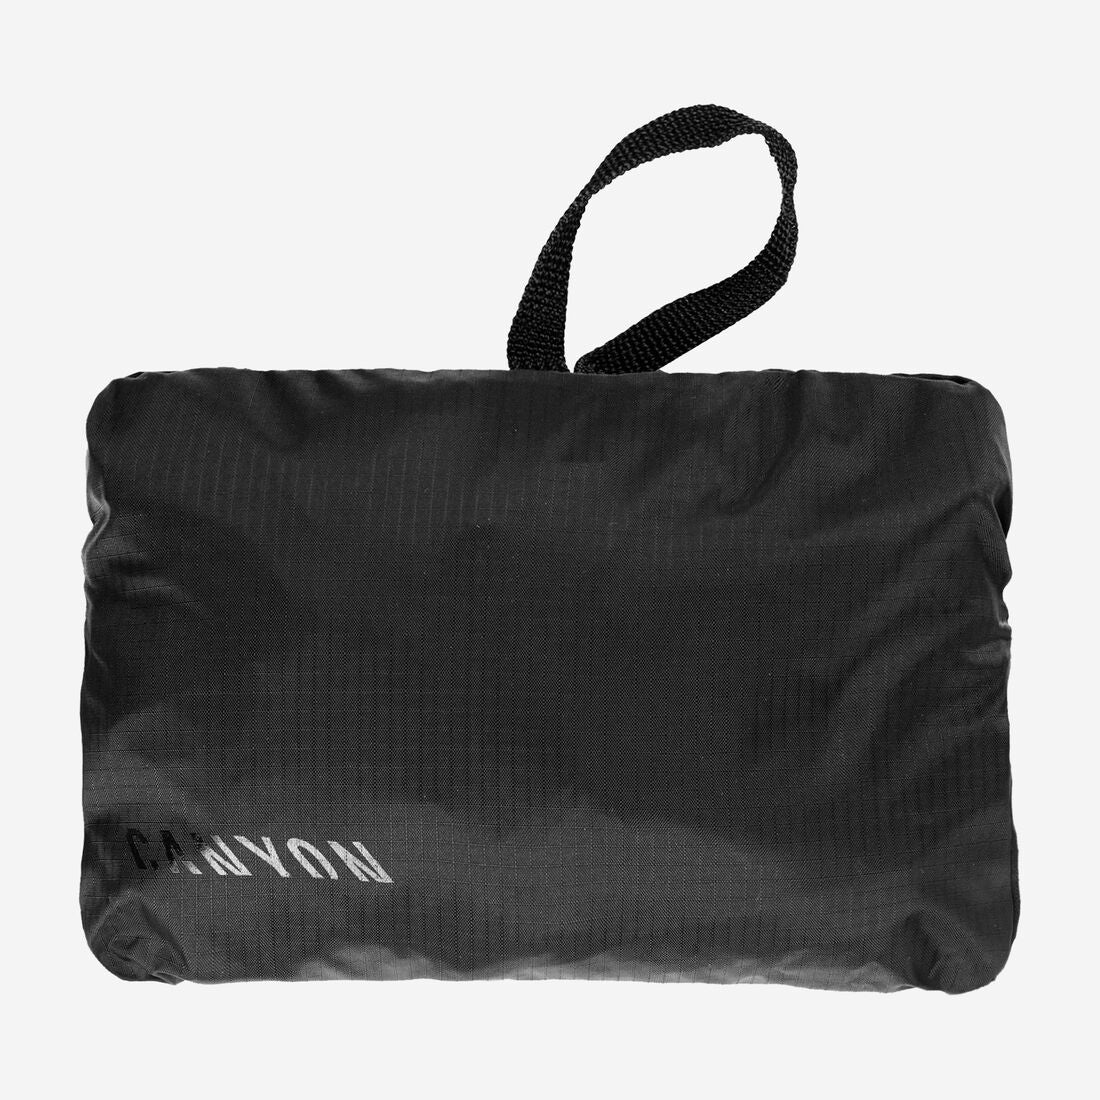 CANYON Foldable Backpack